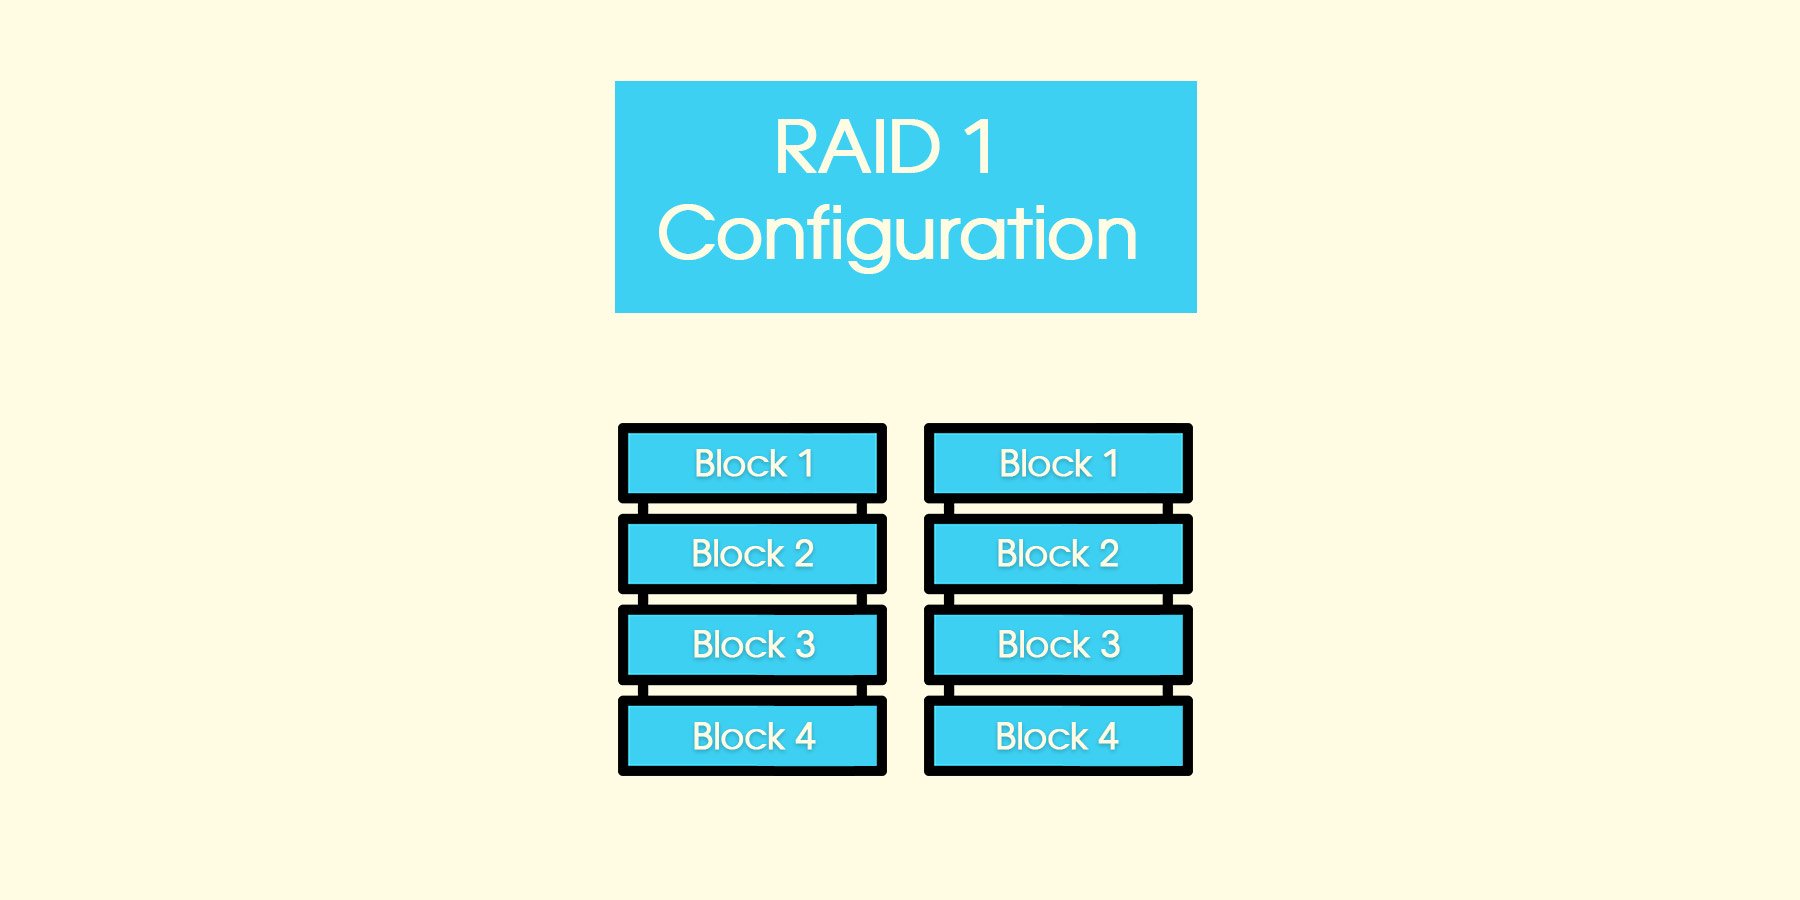 RAID 1 Configuration